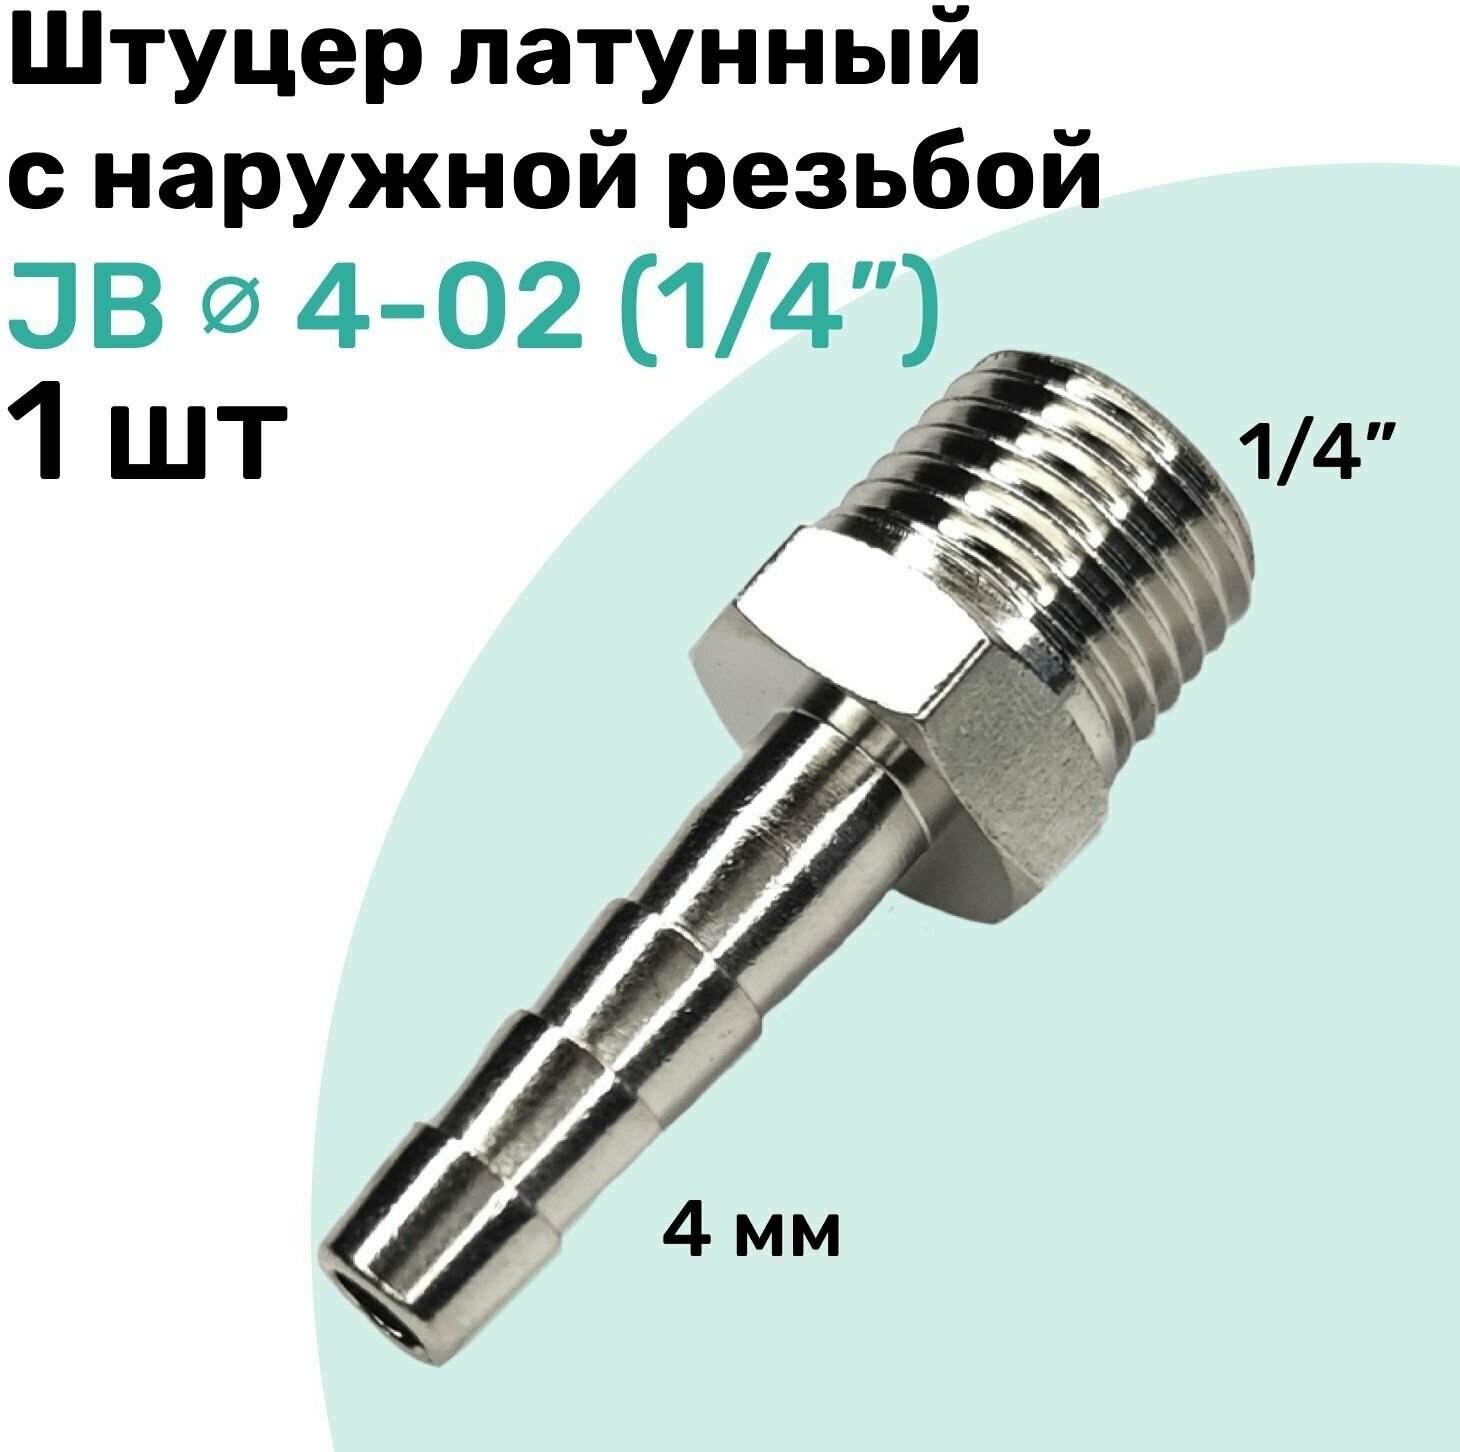 Штуцер латунный елочка с наружной резьбой JB 4-02 4мм - R1/4" Пневмоштуцер NBPT